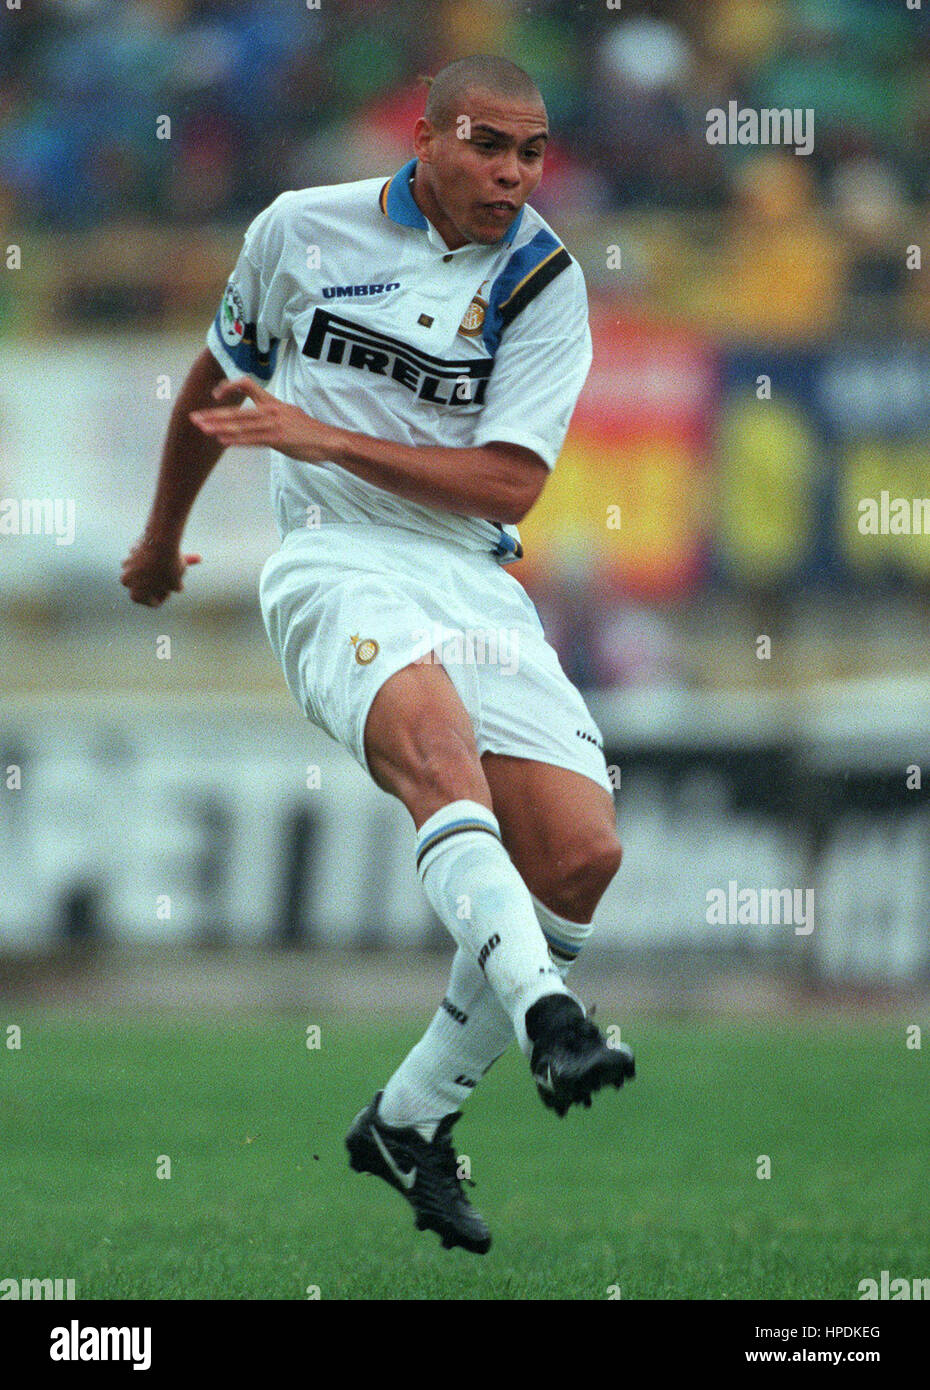 RONALDO INTER MILAN FC 18 September 1997 Stock Photo: 134295688 - Alamy